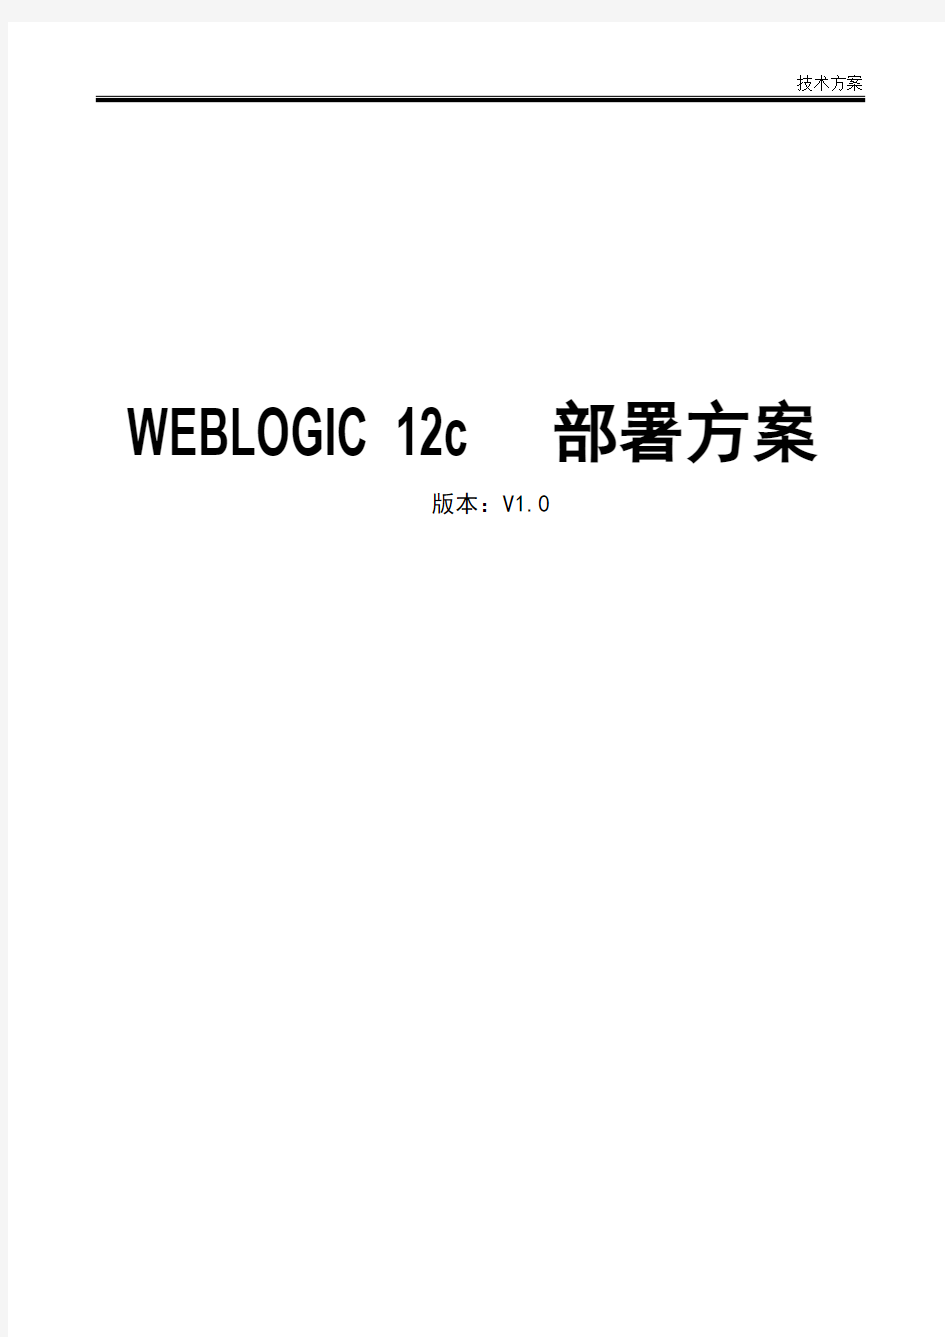 WEBLOGIC-12C LINUX部署方案